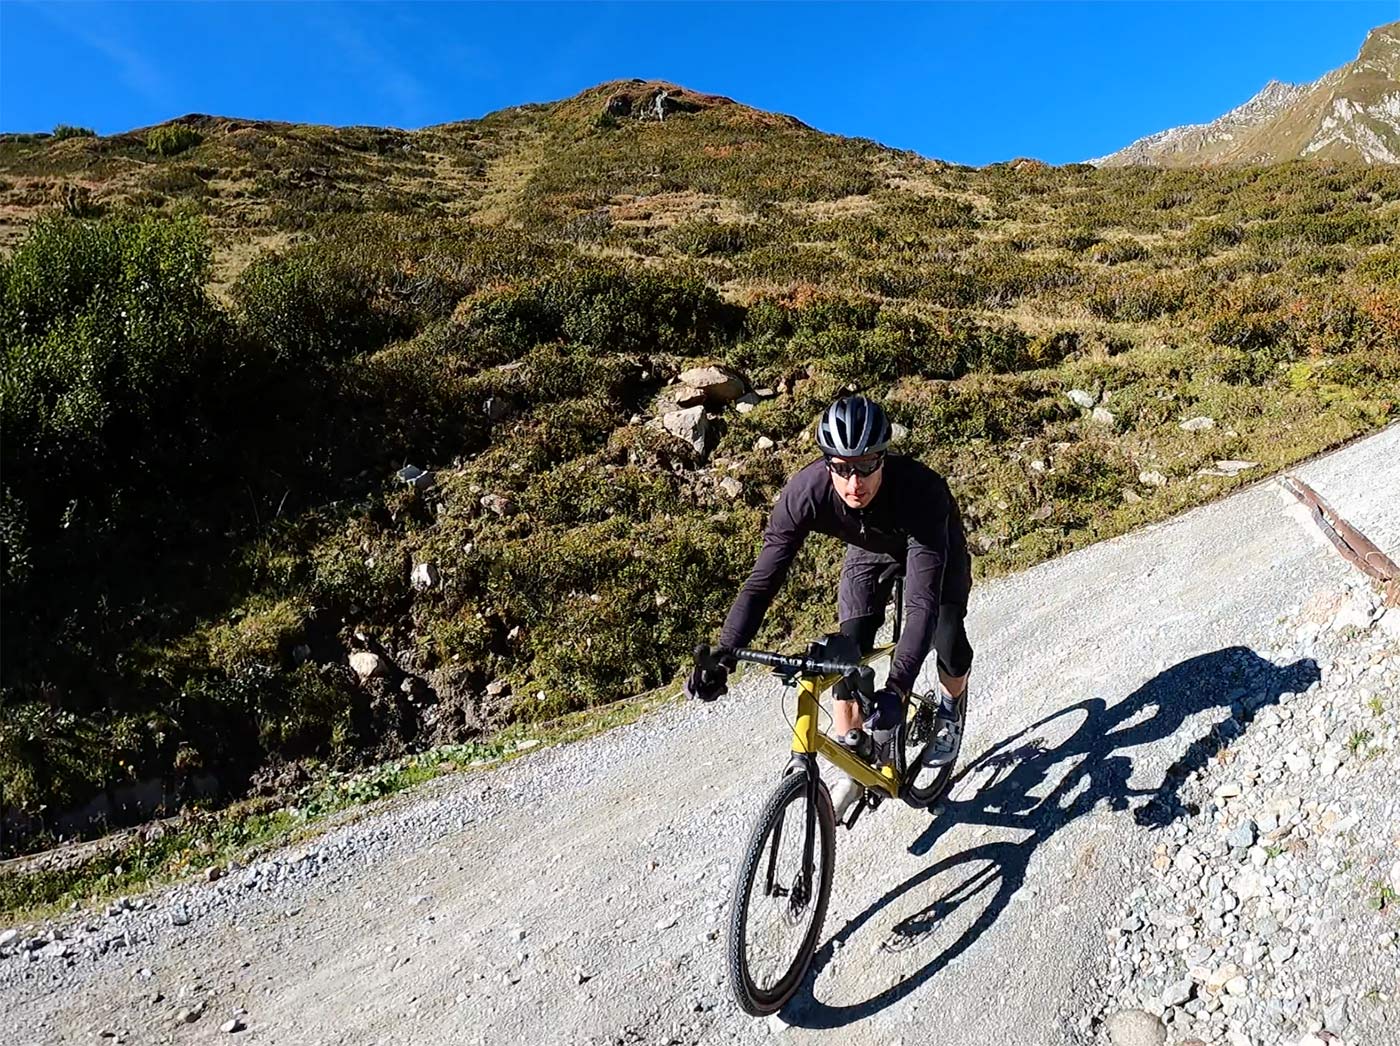 bmc urs lt full suspension gravel bike review ride down a mountain pass in switzerland